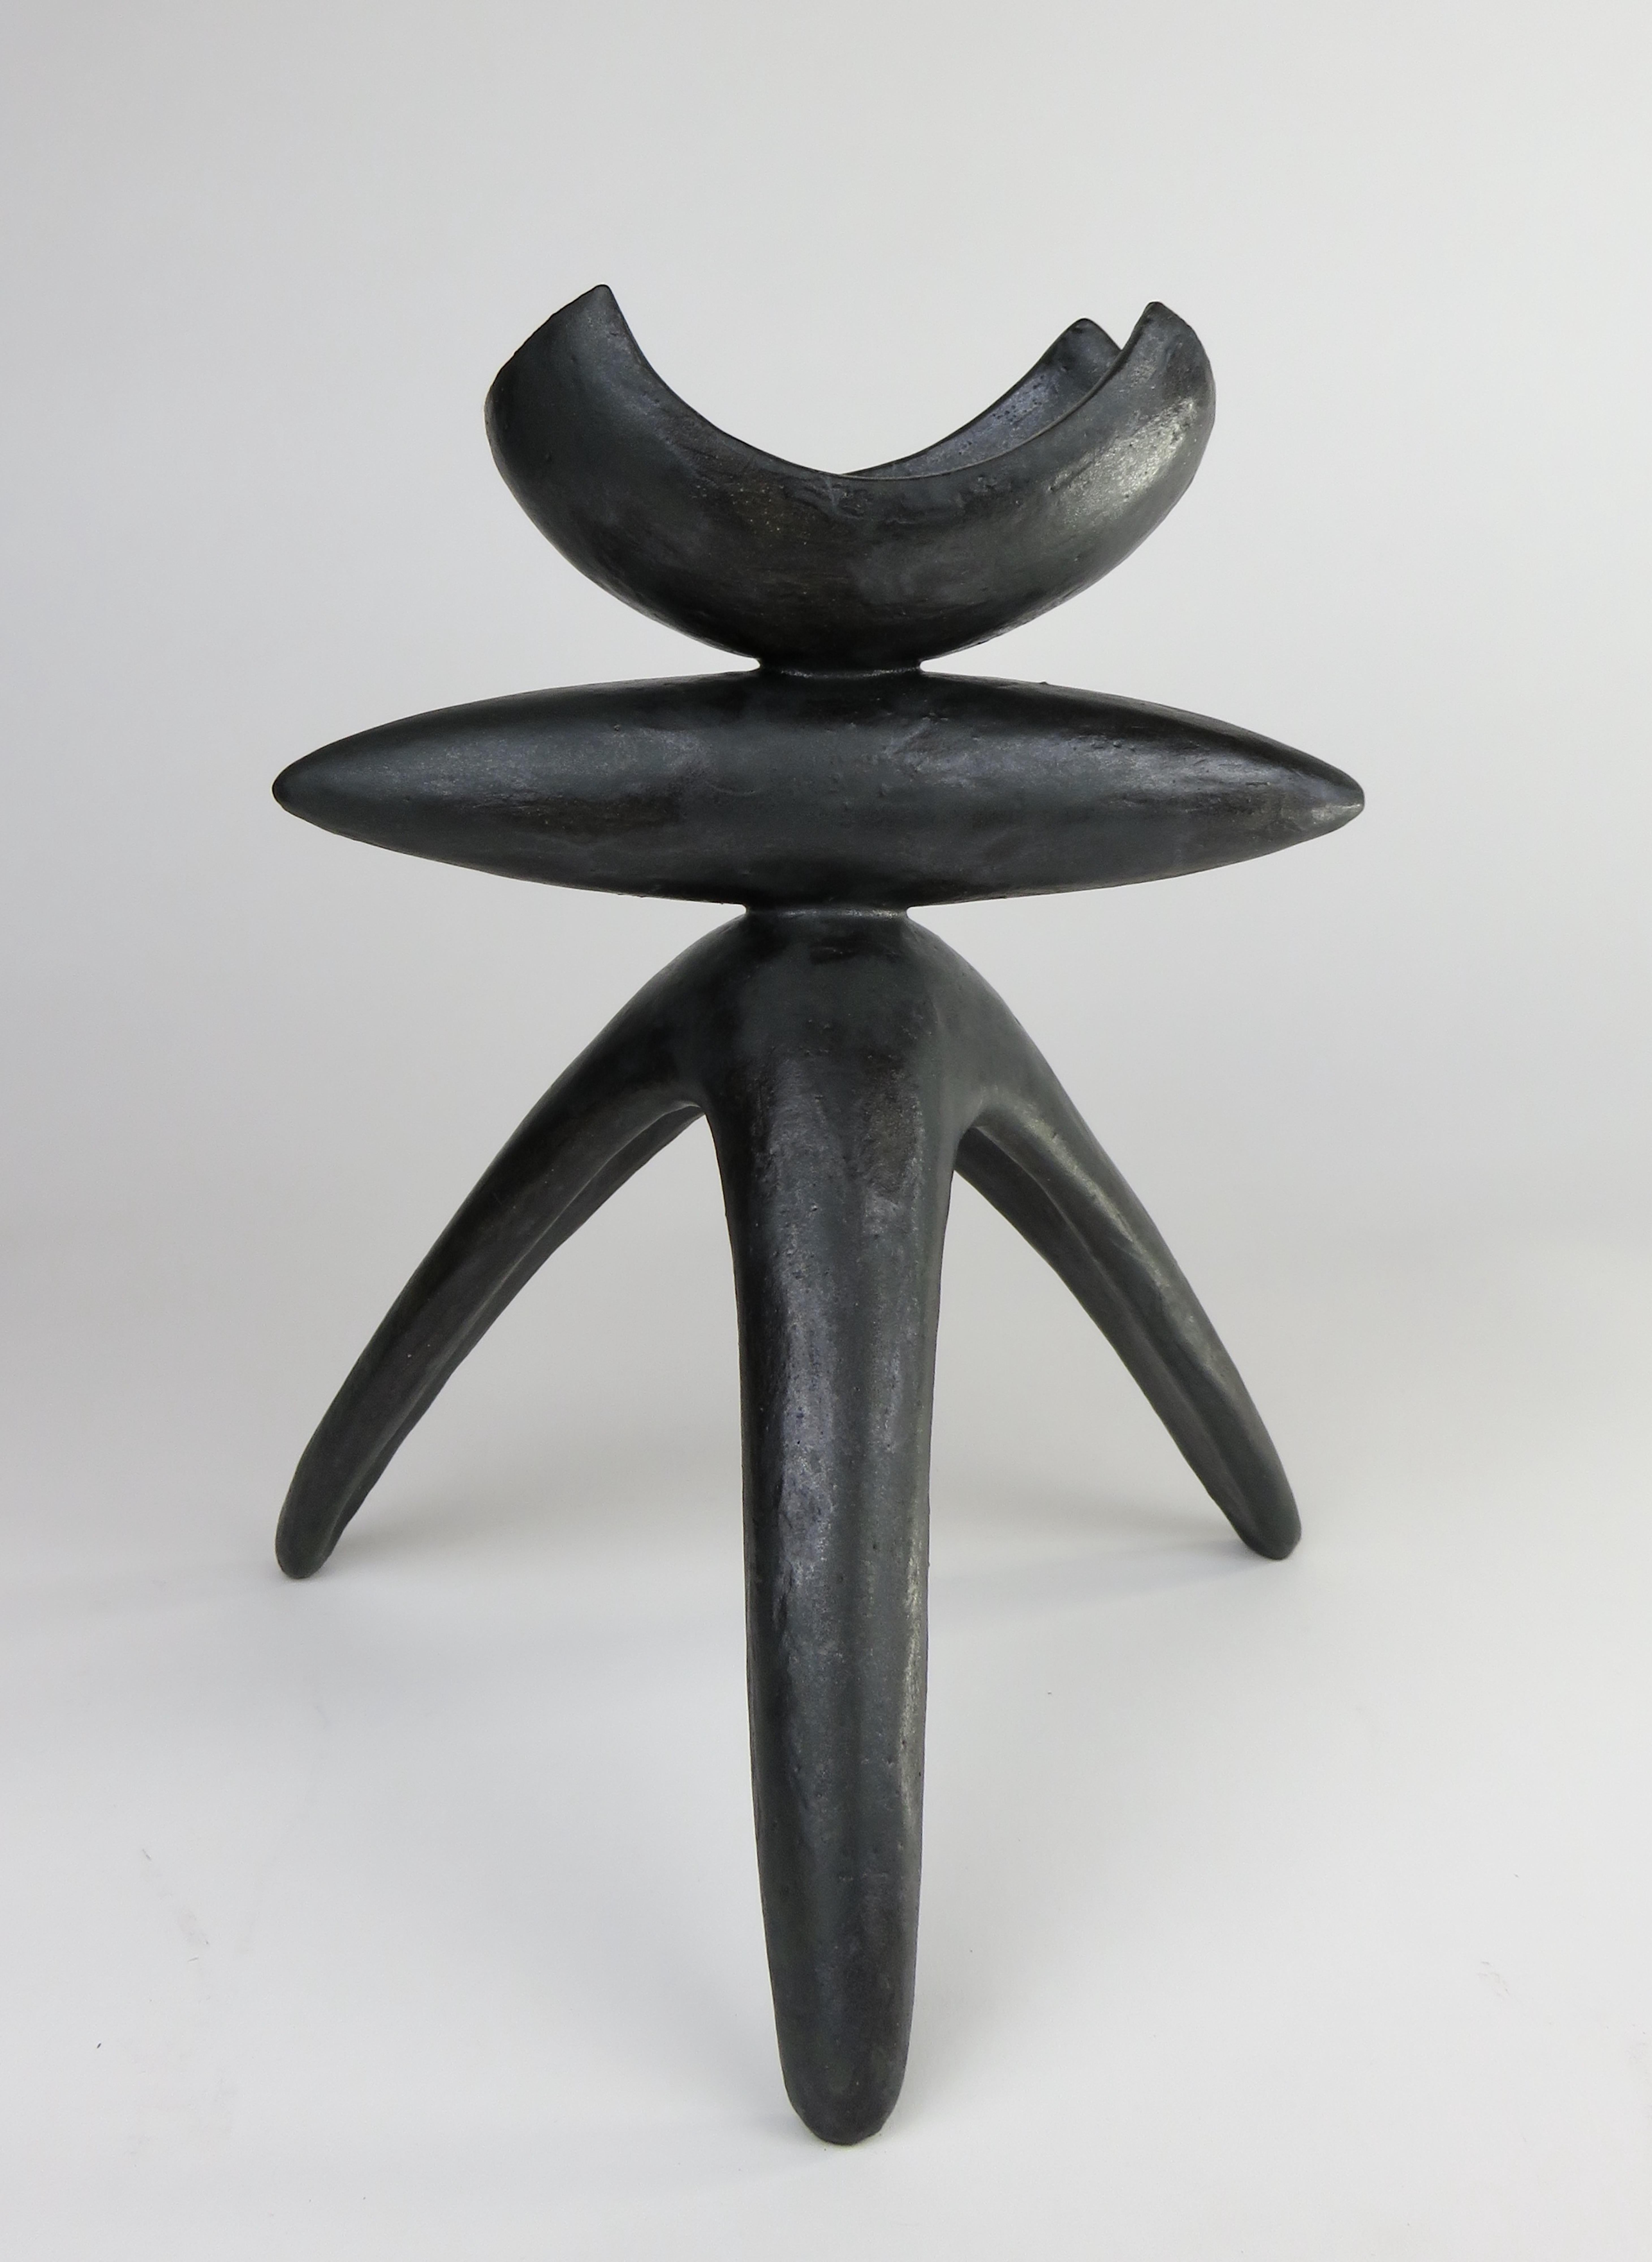 Organic Modern Open Curved-Top Black Ceramic TOTEM, Elliptical Center, Tripod Legs, Hand Built